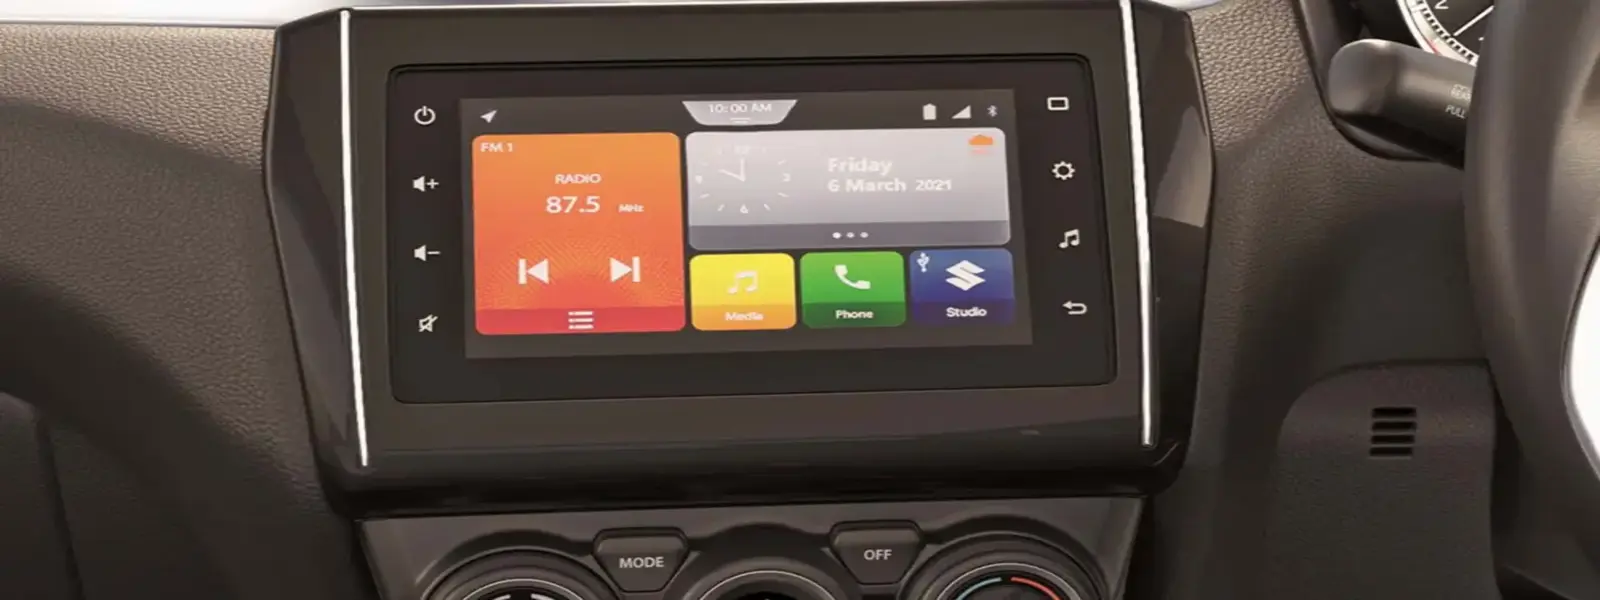 Swift- SmartPlay Infotainment System SWG Car World GT Road, Durgapur